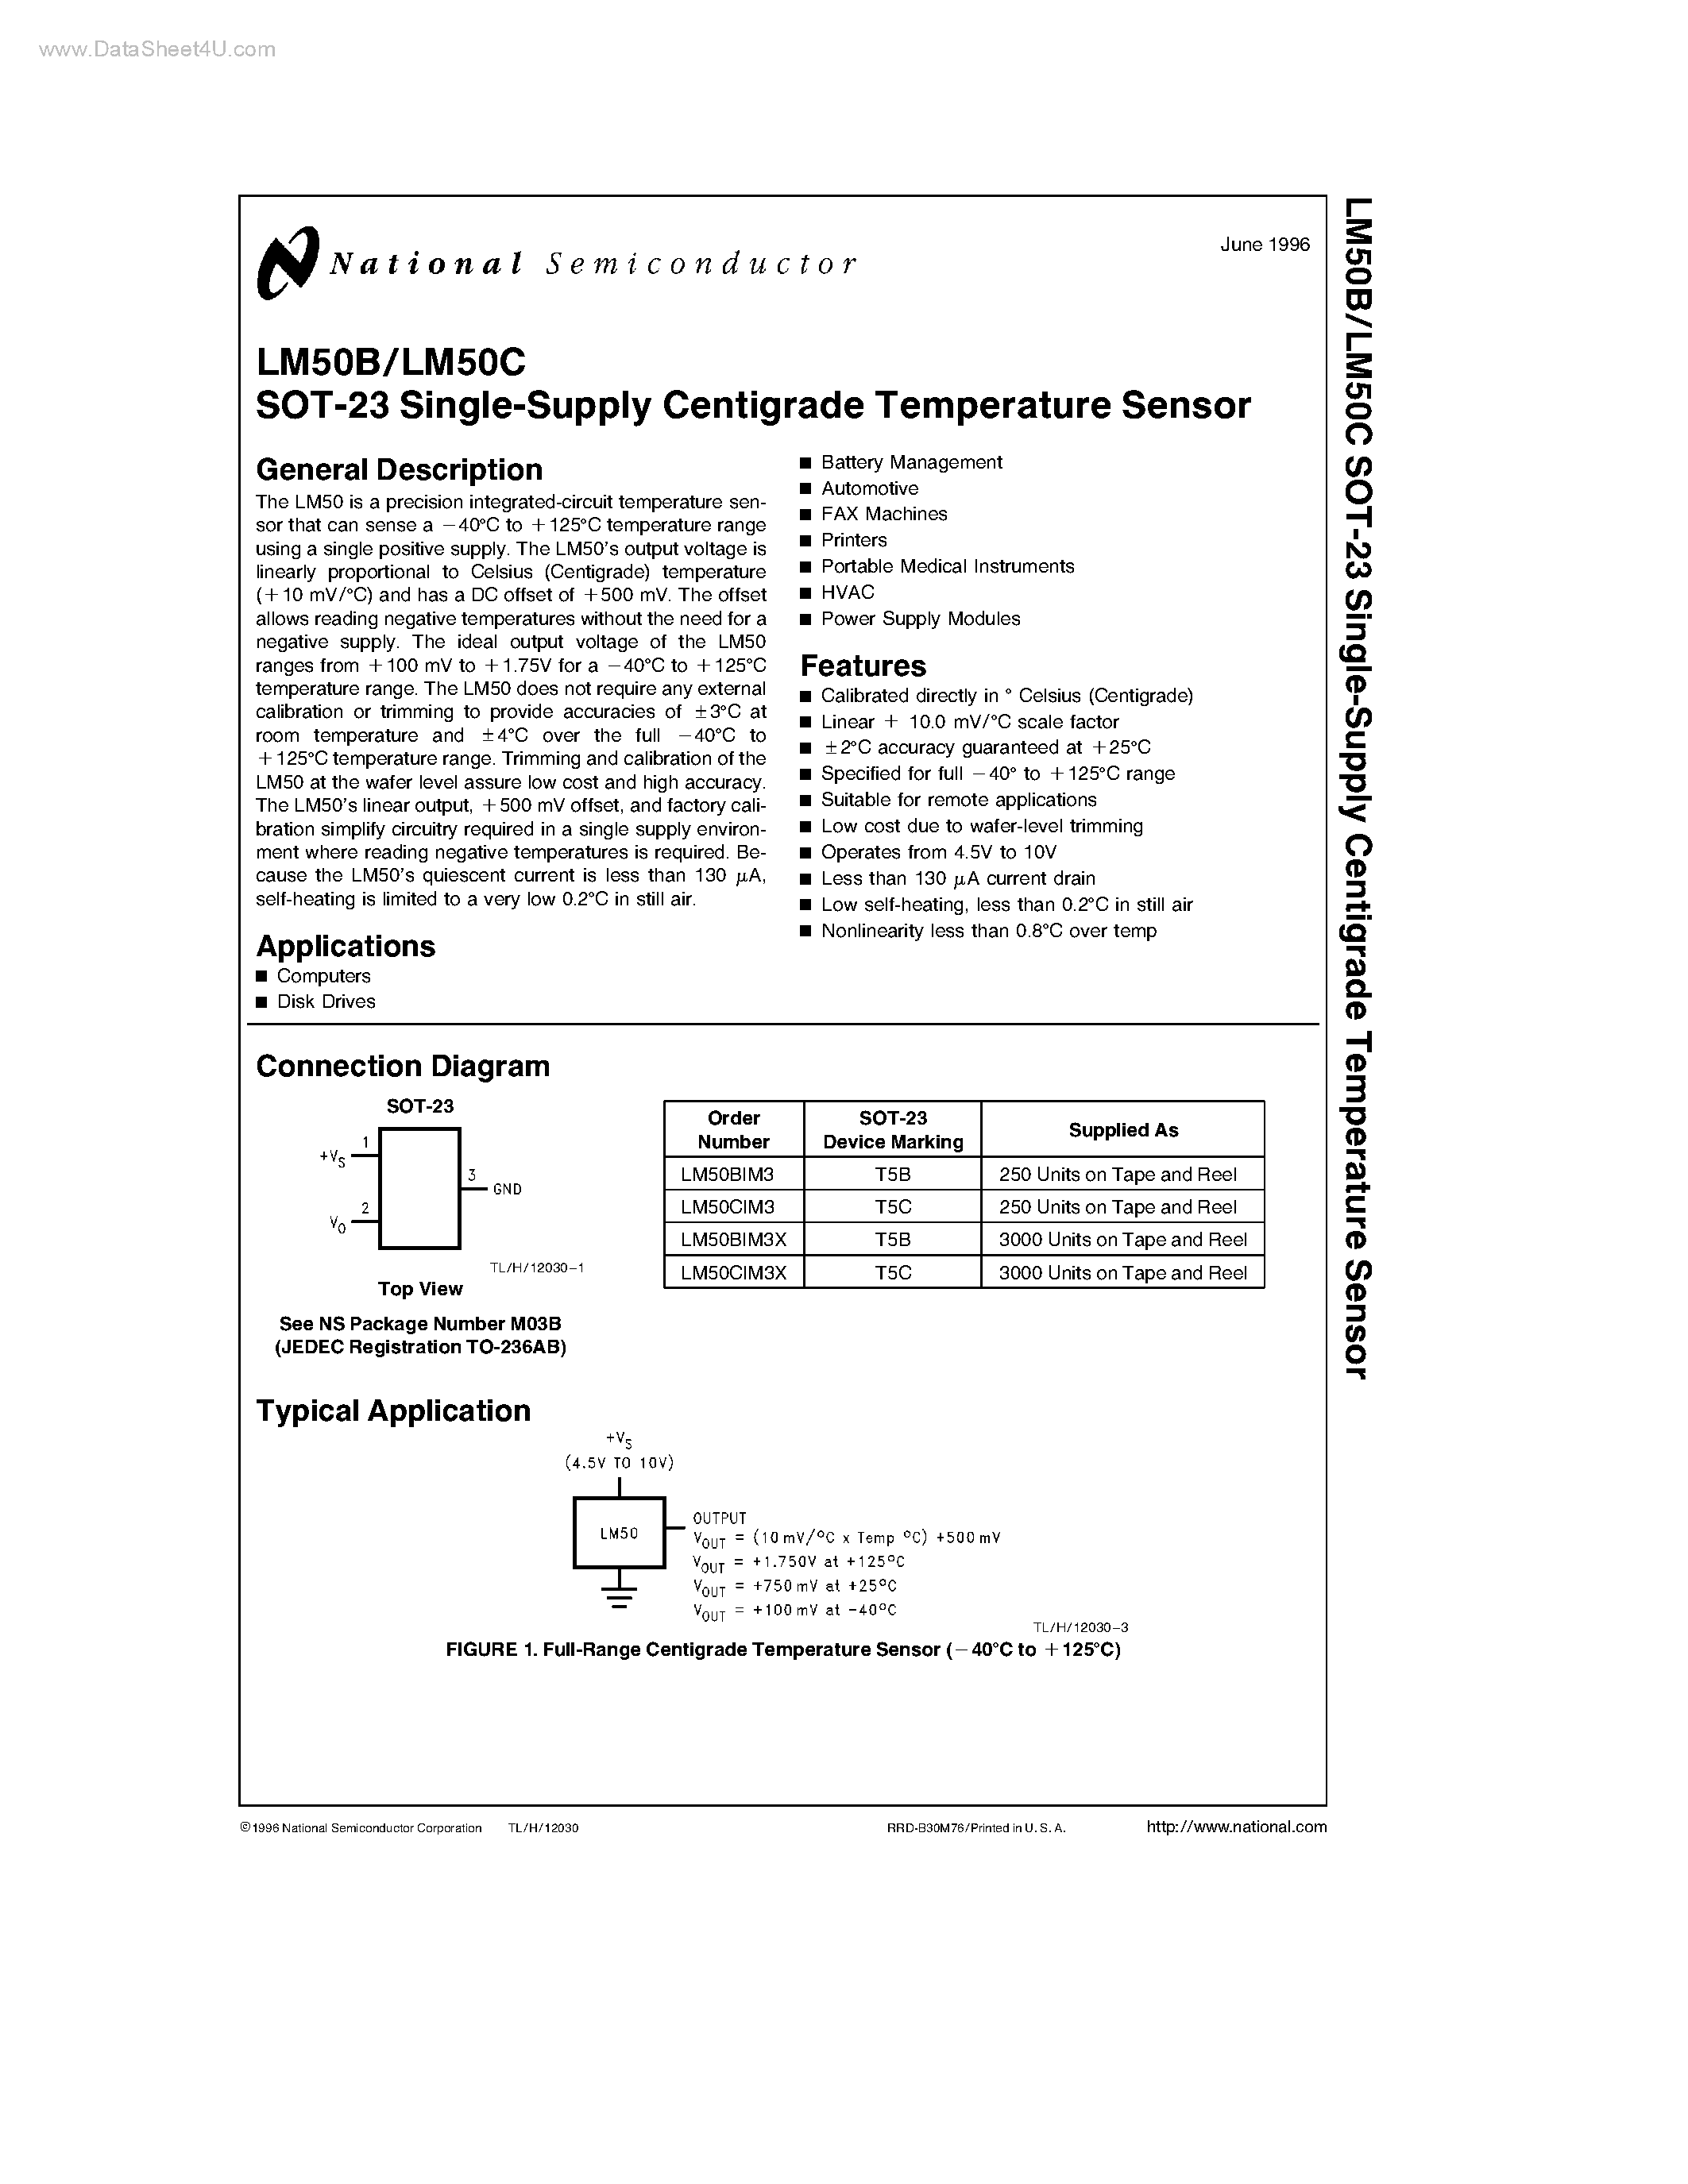 Даташит LM50B - (LM50B / LM50C) SOT-23 Single-Supply Centigrade Temperature Sensor страница 1